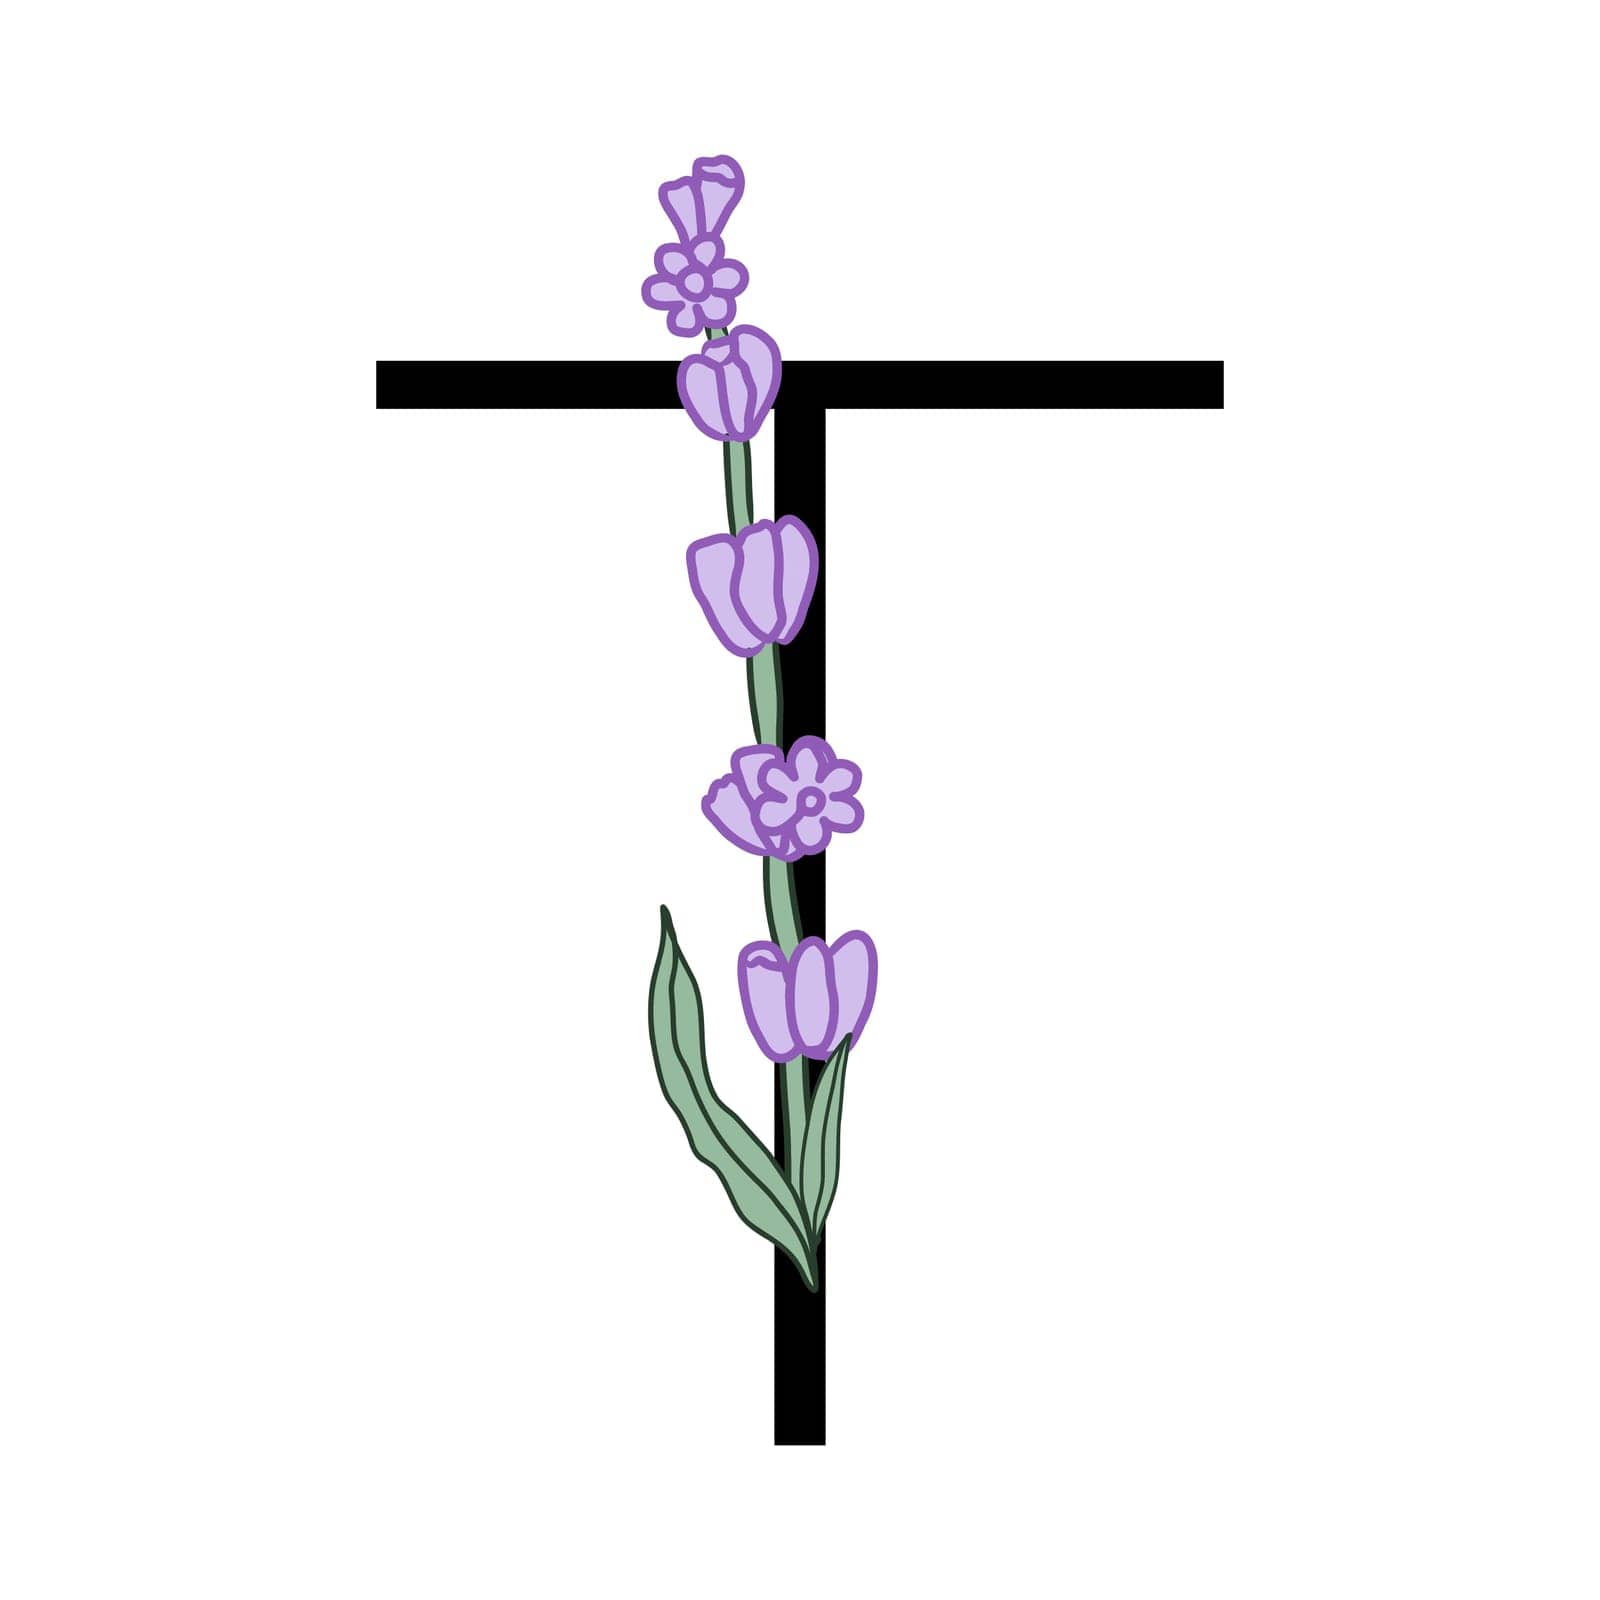 Lavender blossom violet little flower alphabet for design of card or invitation. Vector illustrations, isolated on white background for summer floral gesign by MintanArt